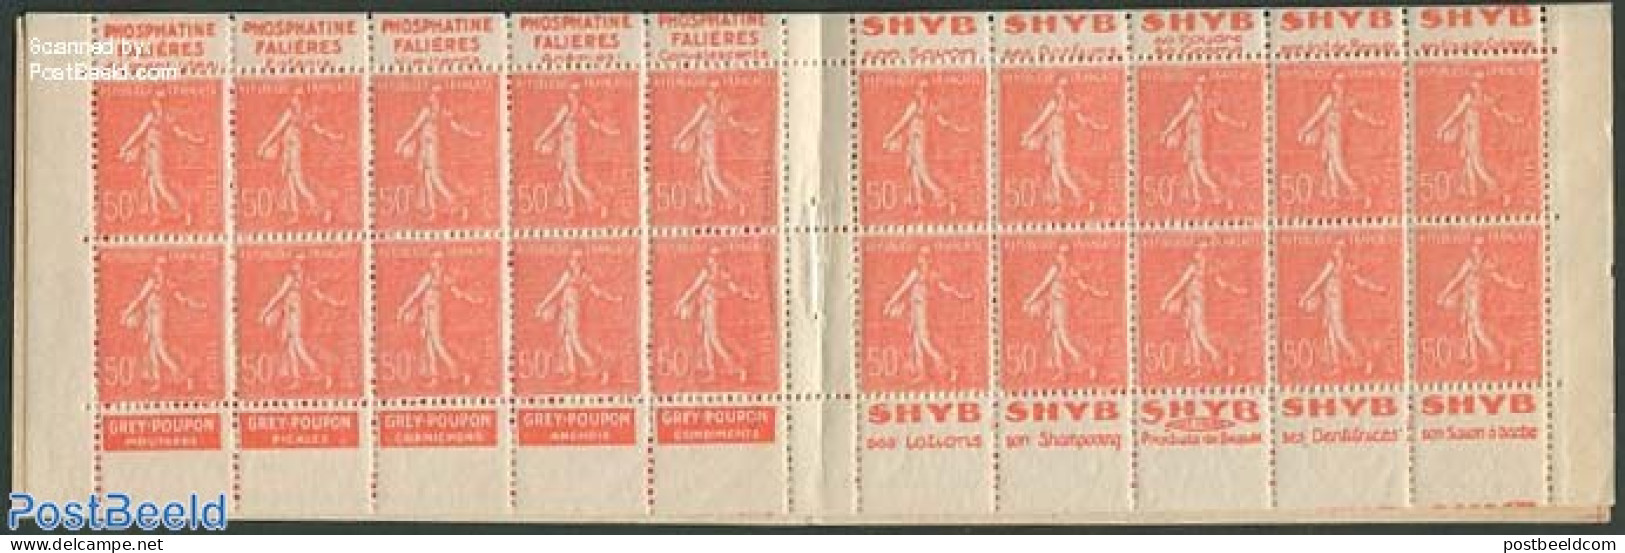 France 1924 20x50c Booklet (Falieres-Shyb-Grey Poupon-Shyb), Mint NH, Stamp Booklets - Ongebruikt